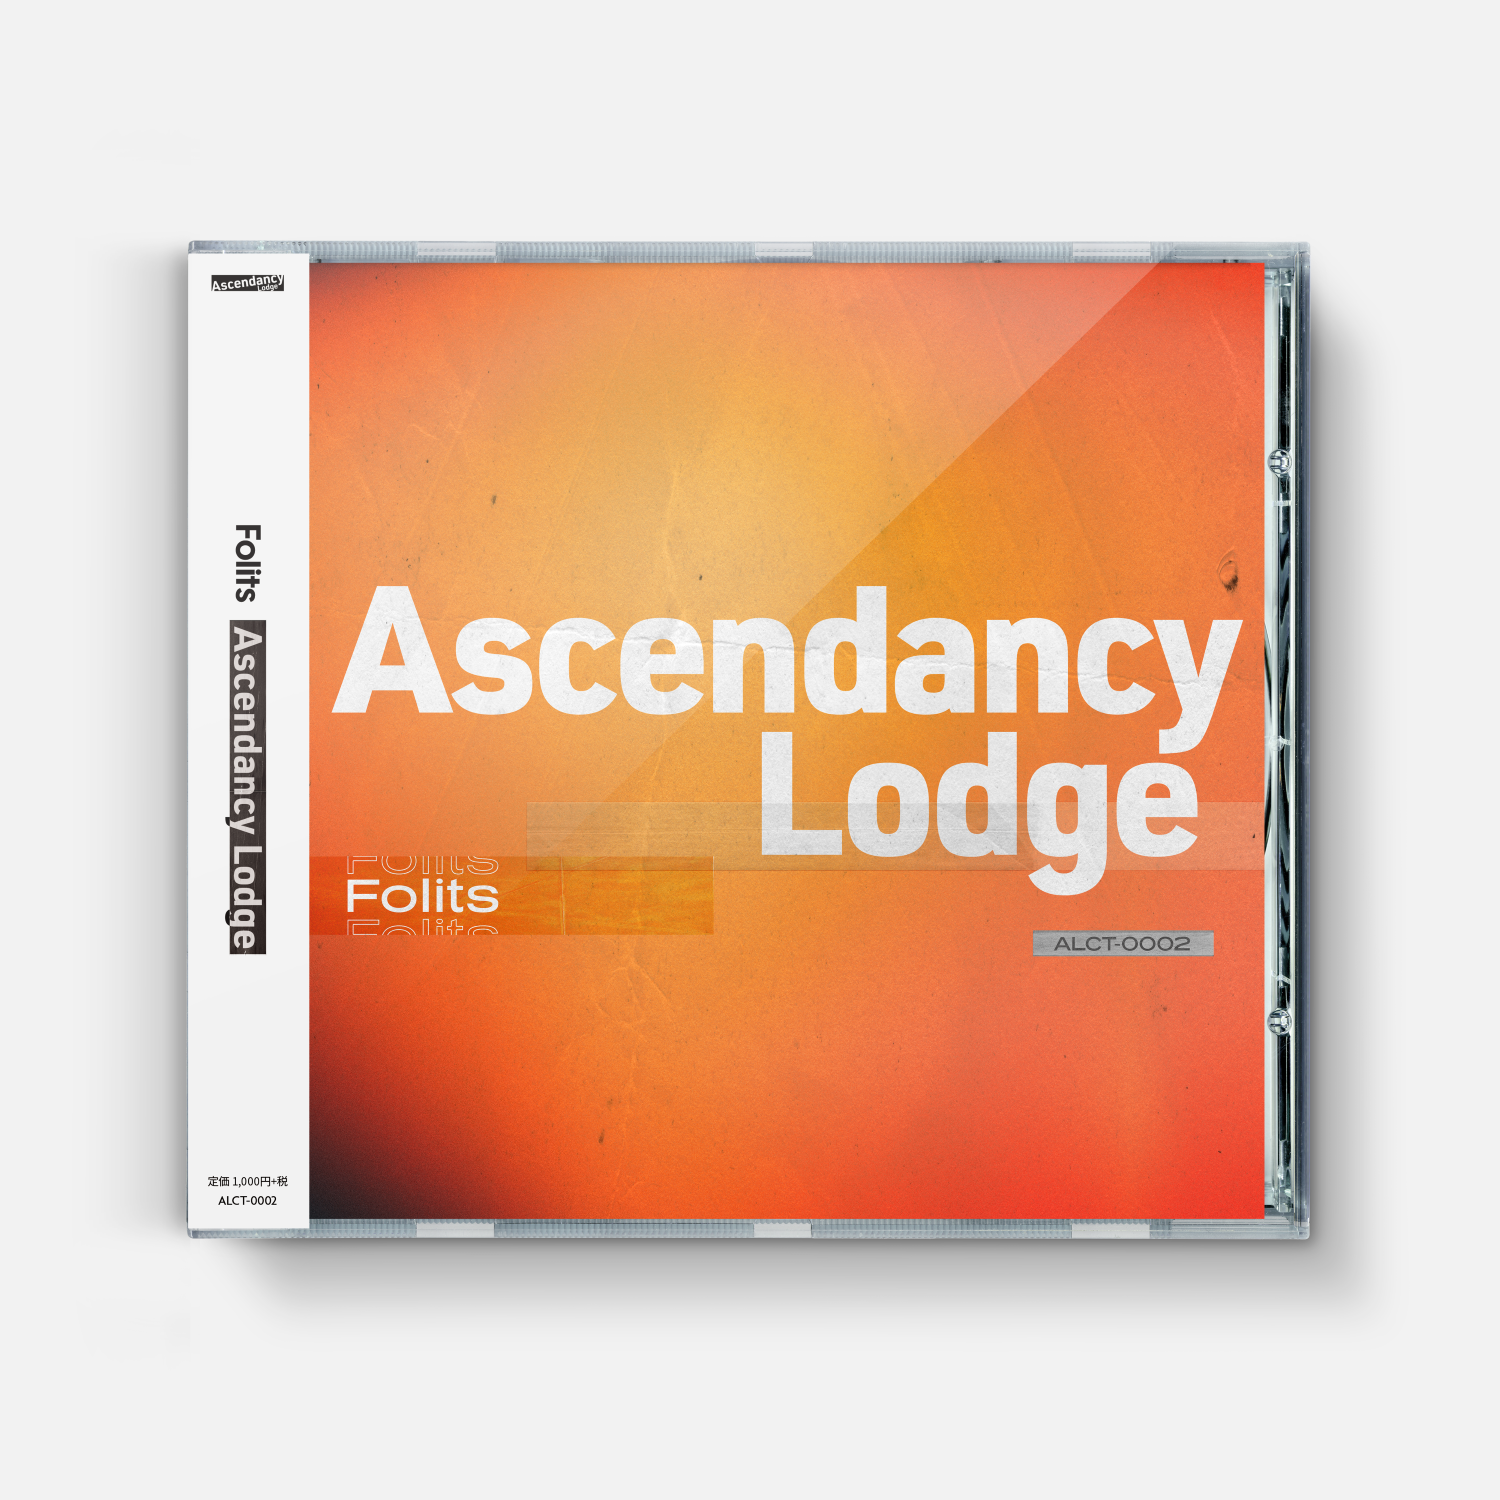 [CD Single] Folits - Ascendancy Lodge - ALCT-0002